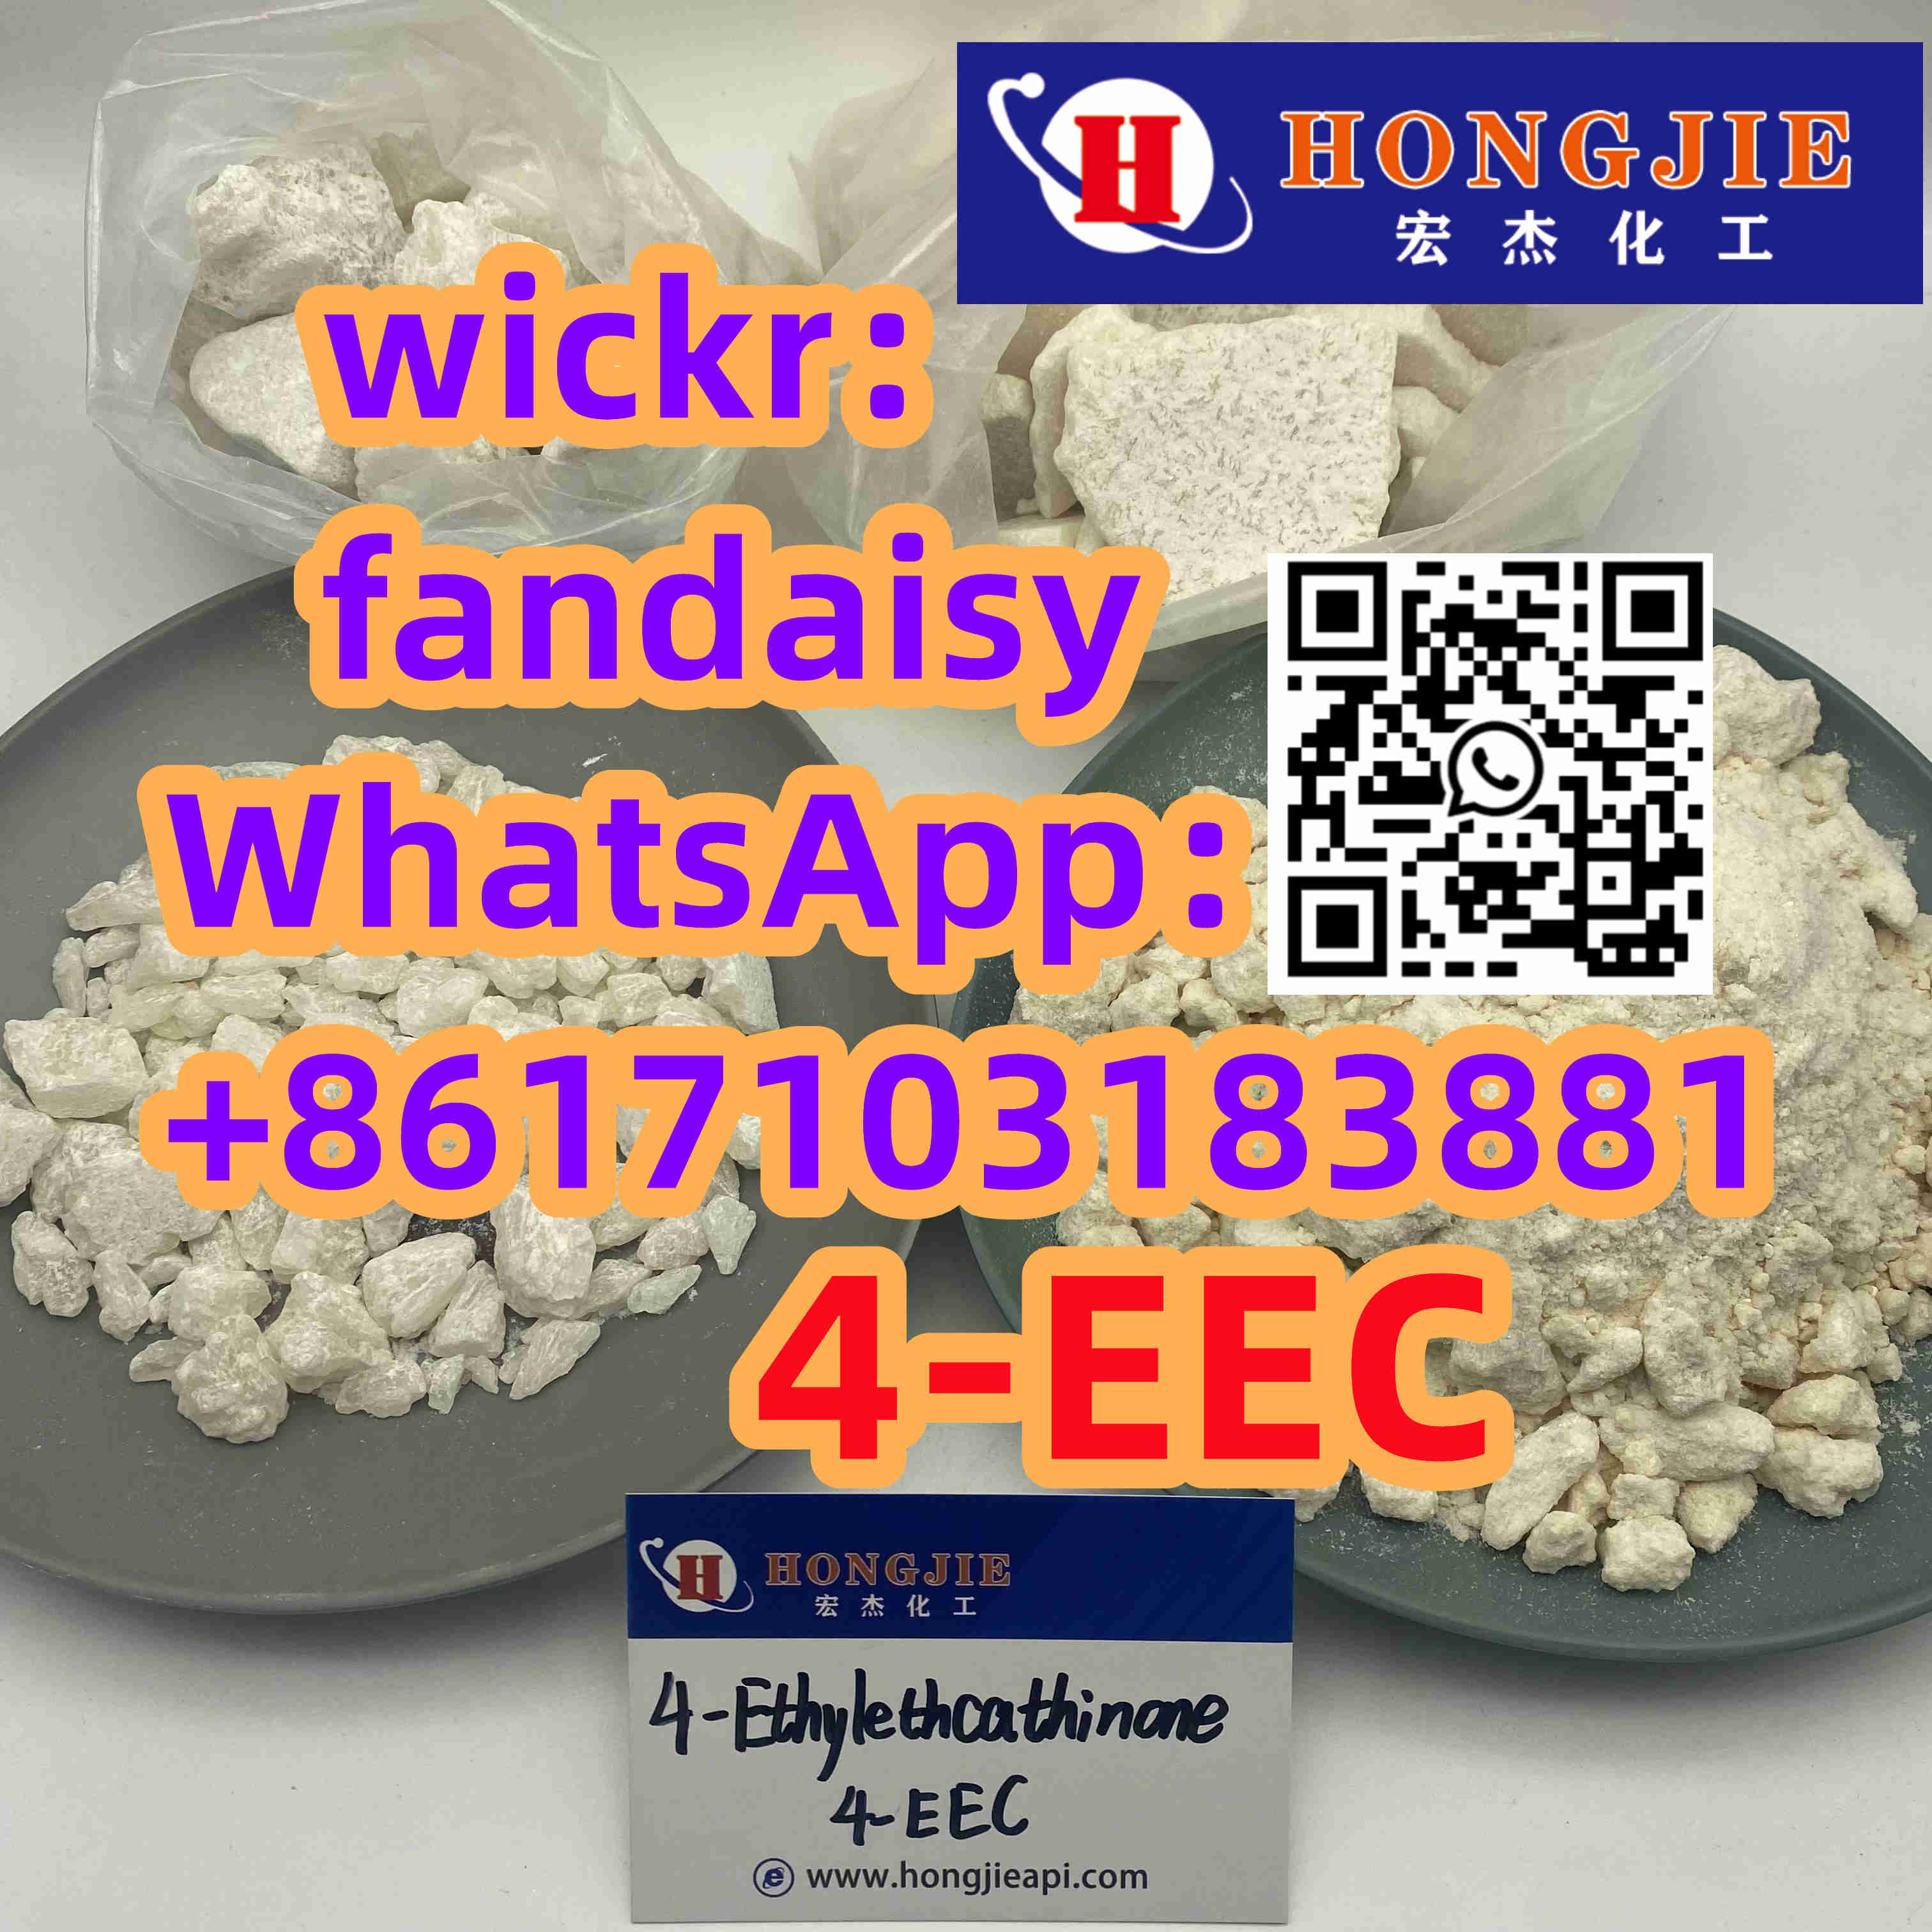 4-EEC 4-Ethylethcathinone (hydrochloride) Goodcas 2446466-62-0